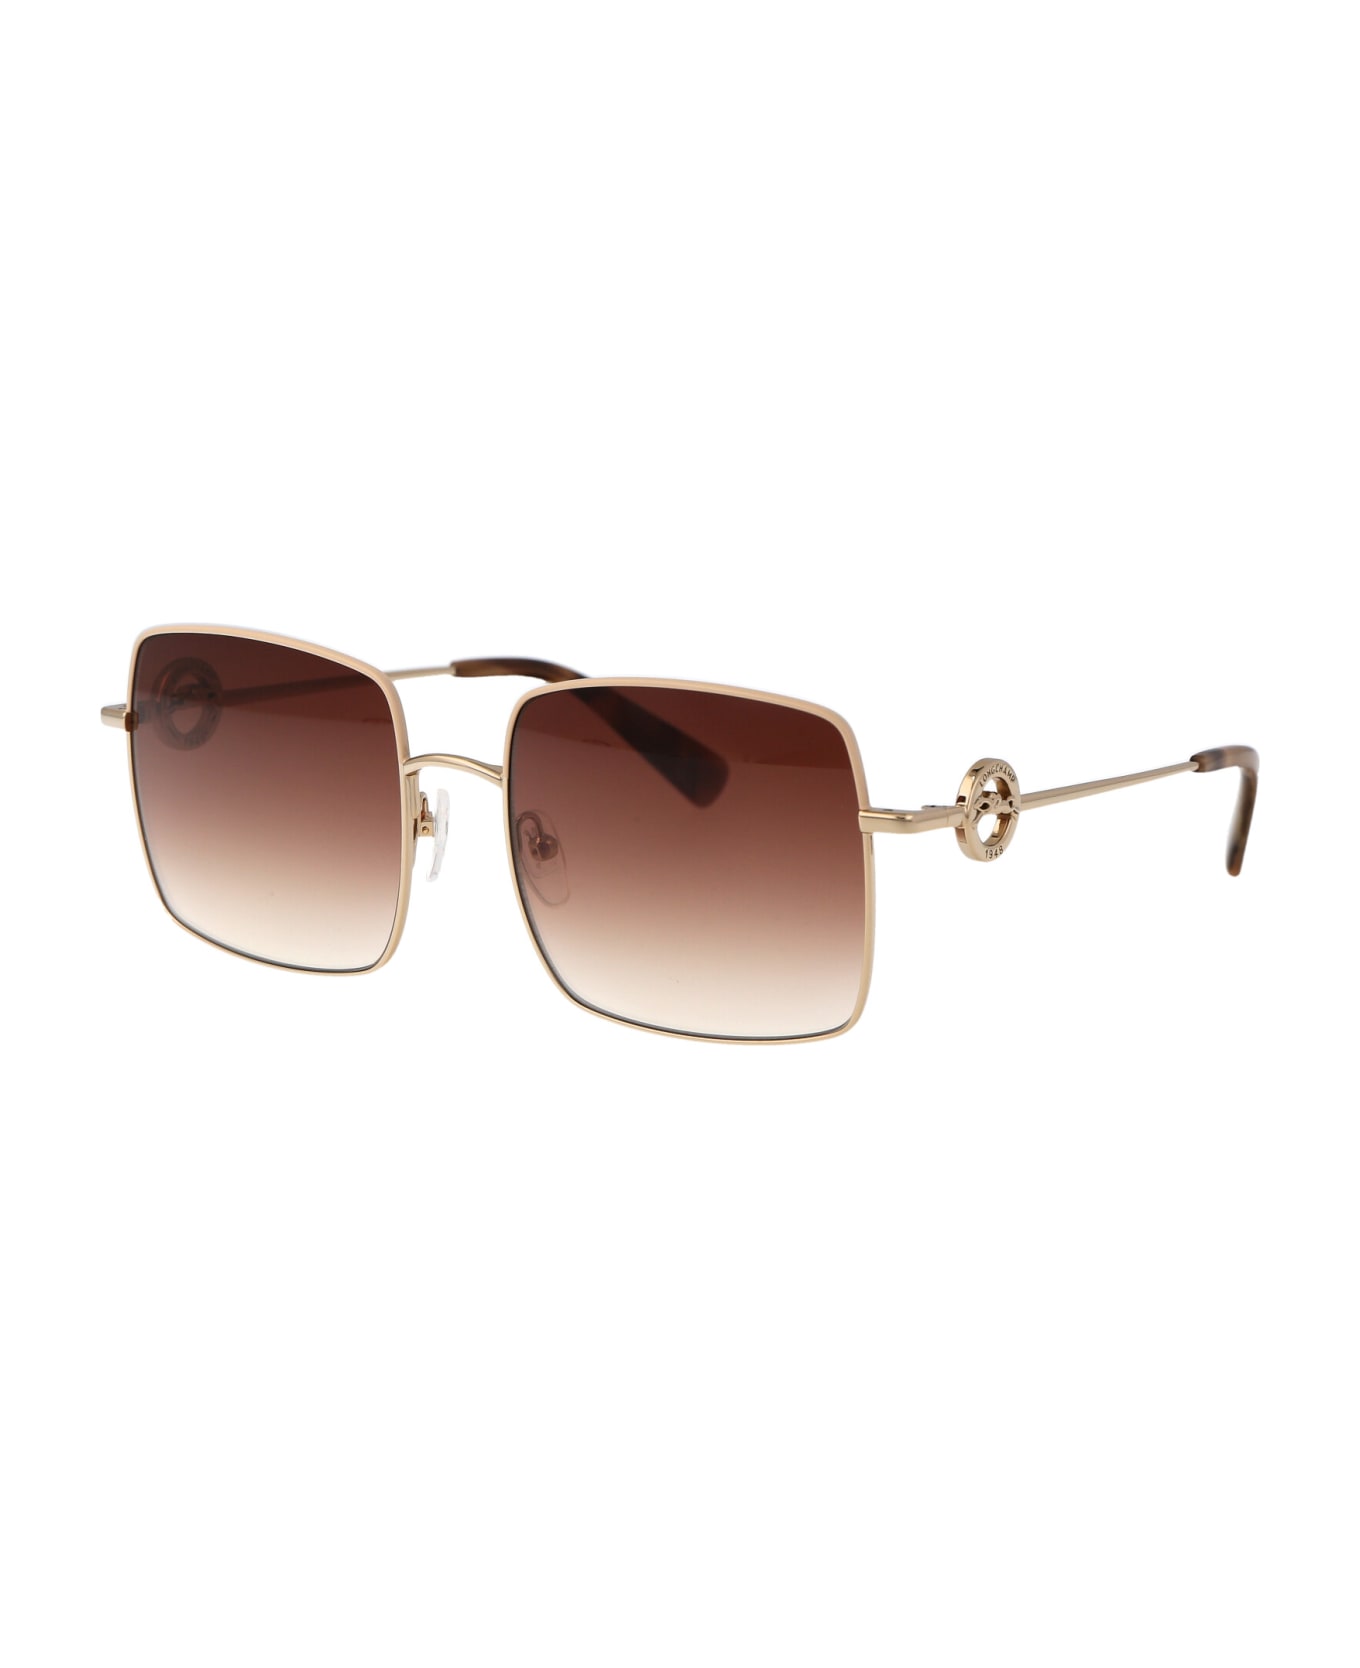 Longchamp Lo162s Sunglasses - 748 GOLD